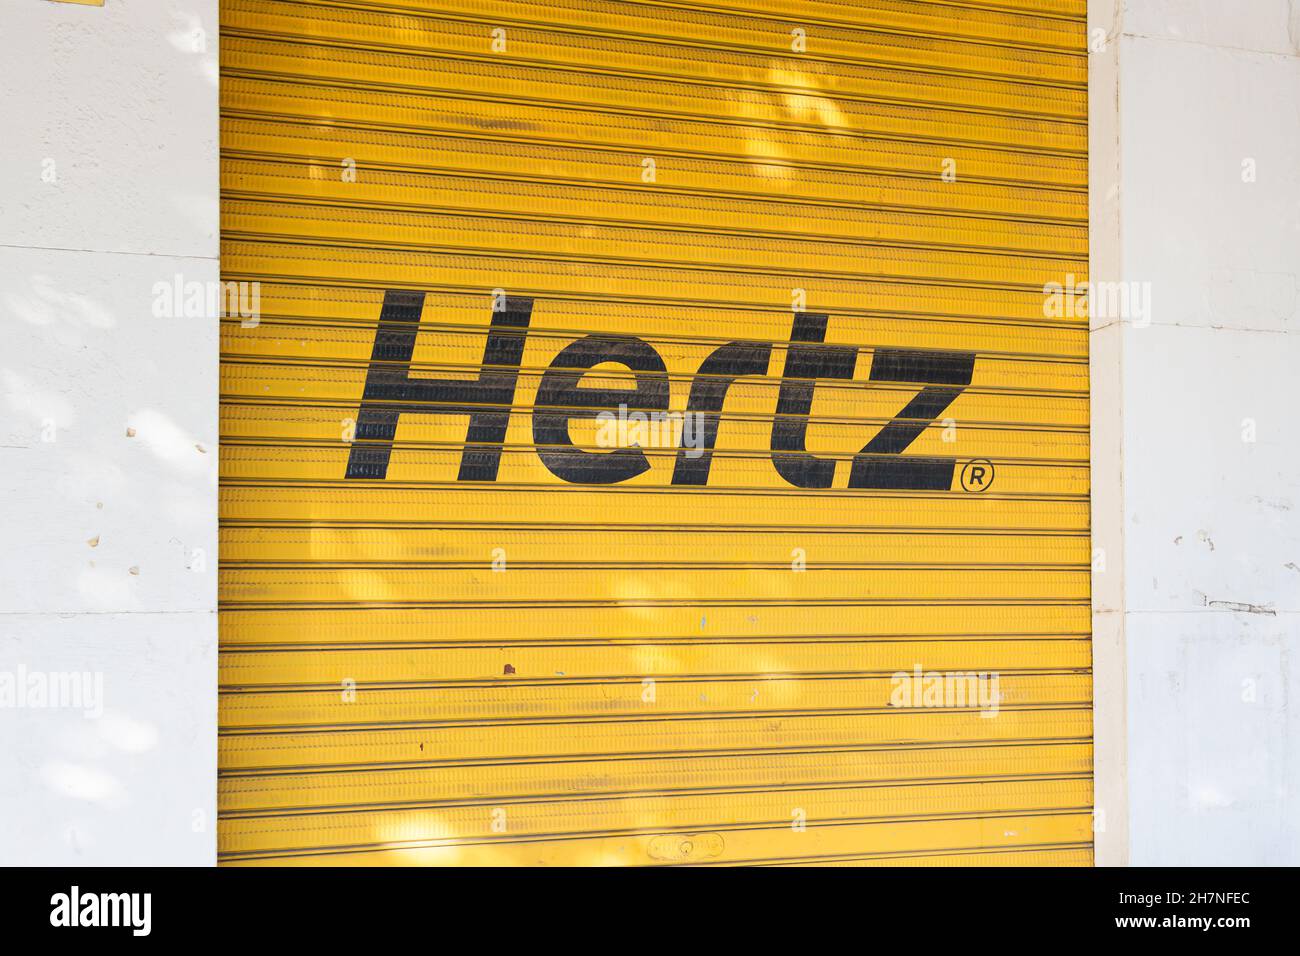 VALENCIA, SPAIN - NOVEMBER 23, 2021: Hertz is an American car rental company based in Florida Stock Photo